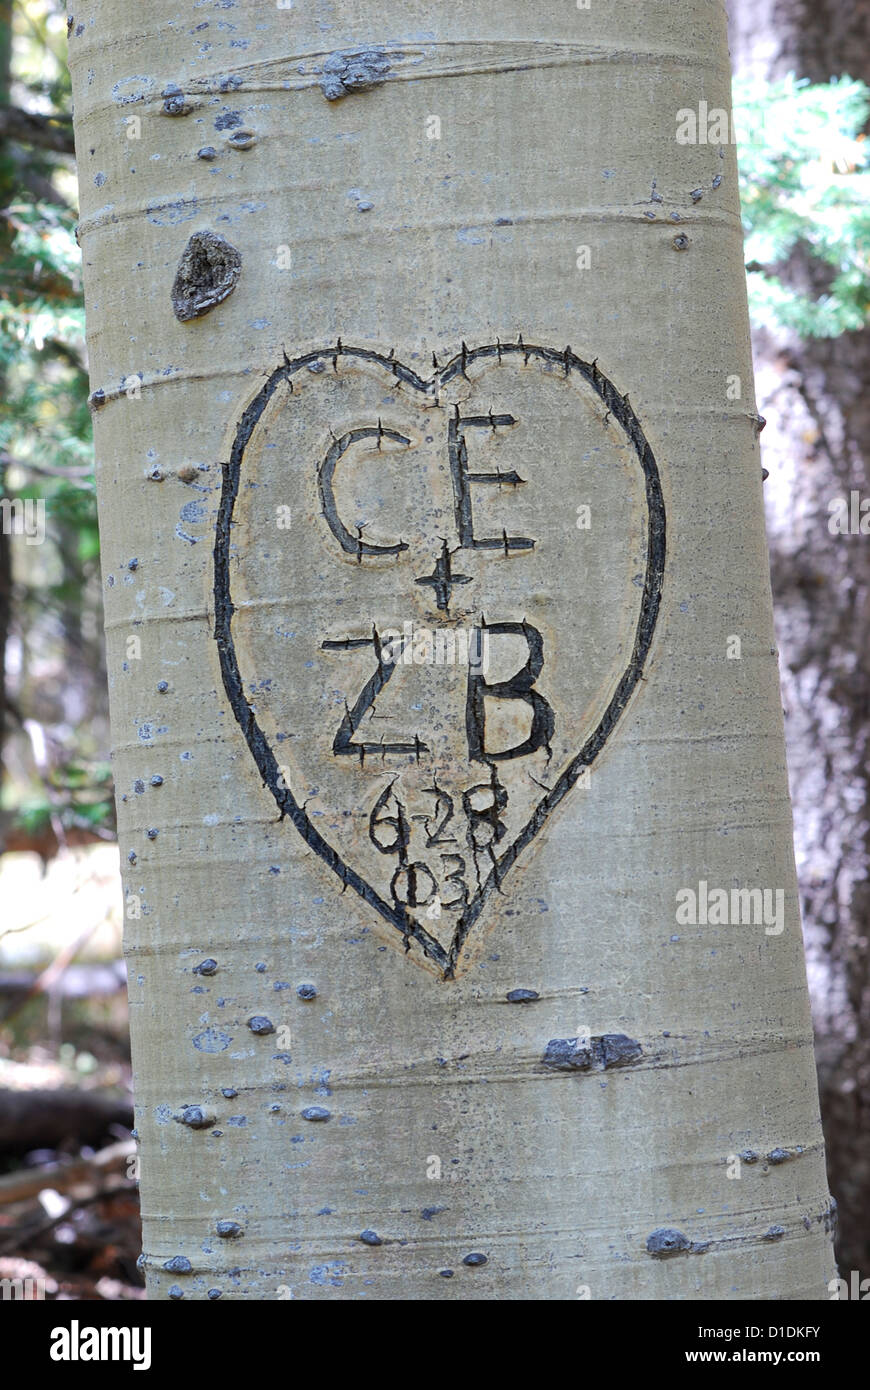 Graffiti carved into aspen tree trunk in Northern Arizona. Stock Photo